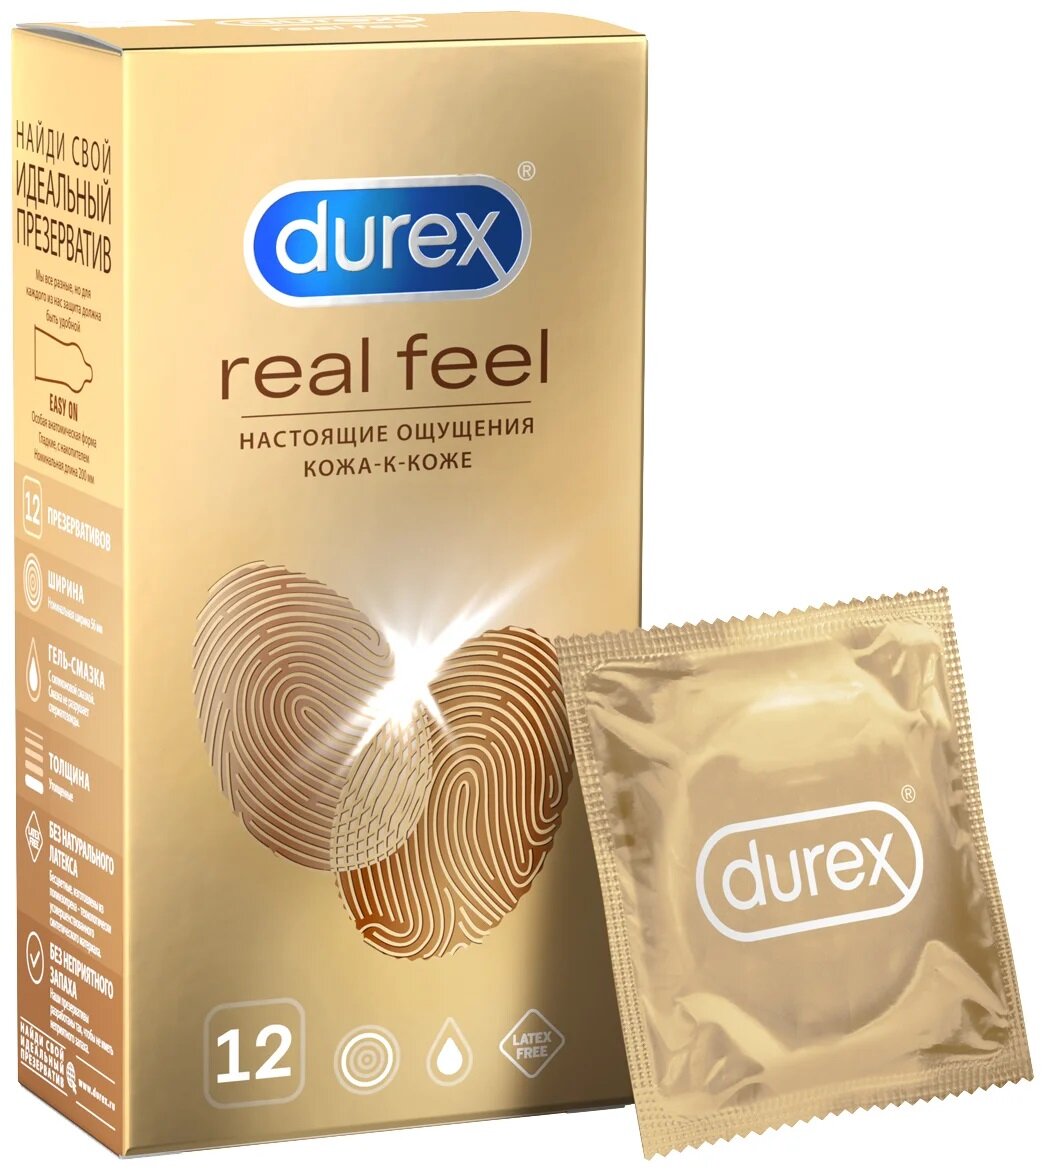 Презервативы DUREX Дюрекс real feel №12